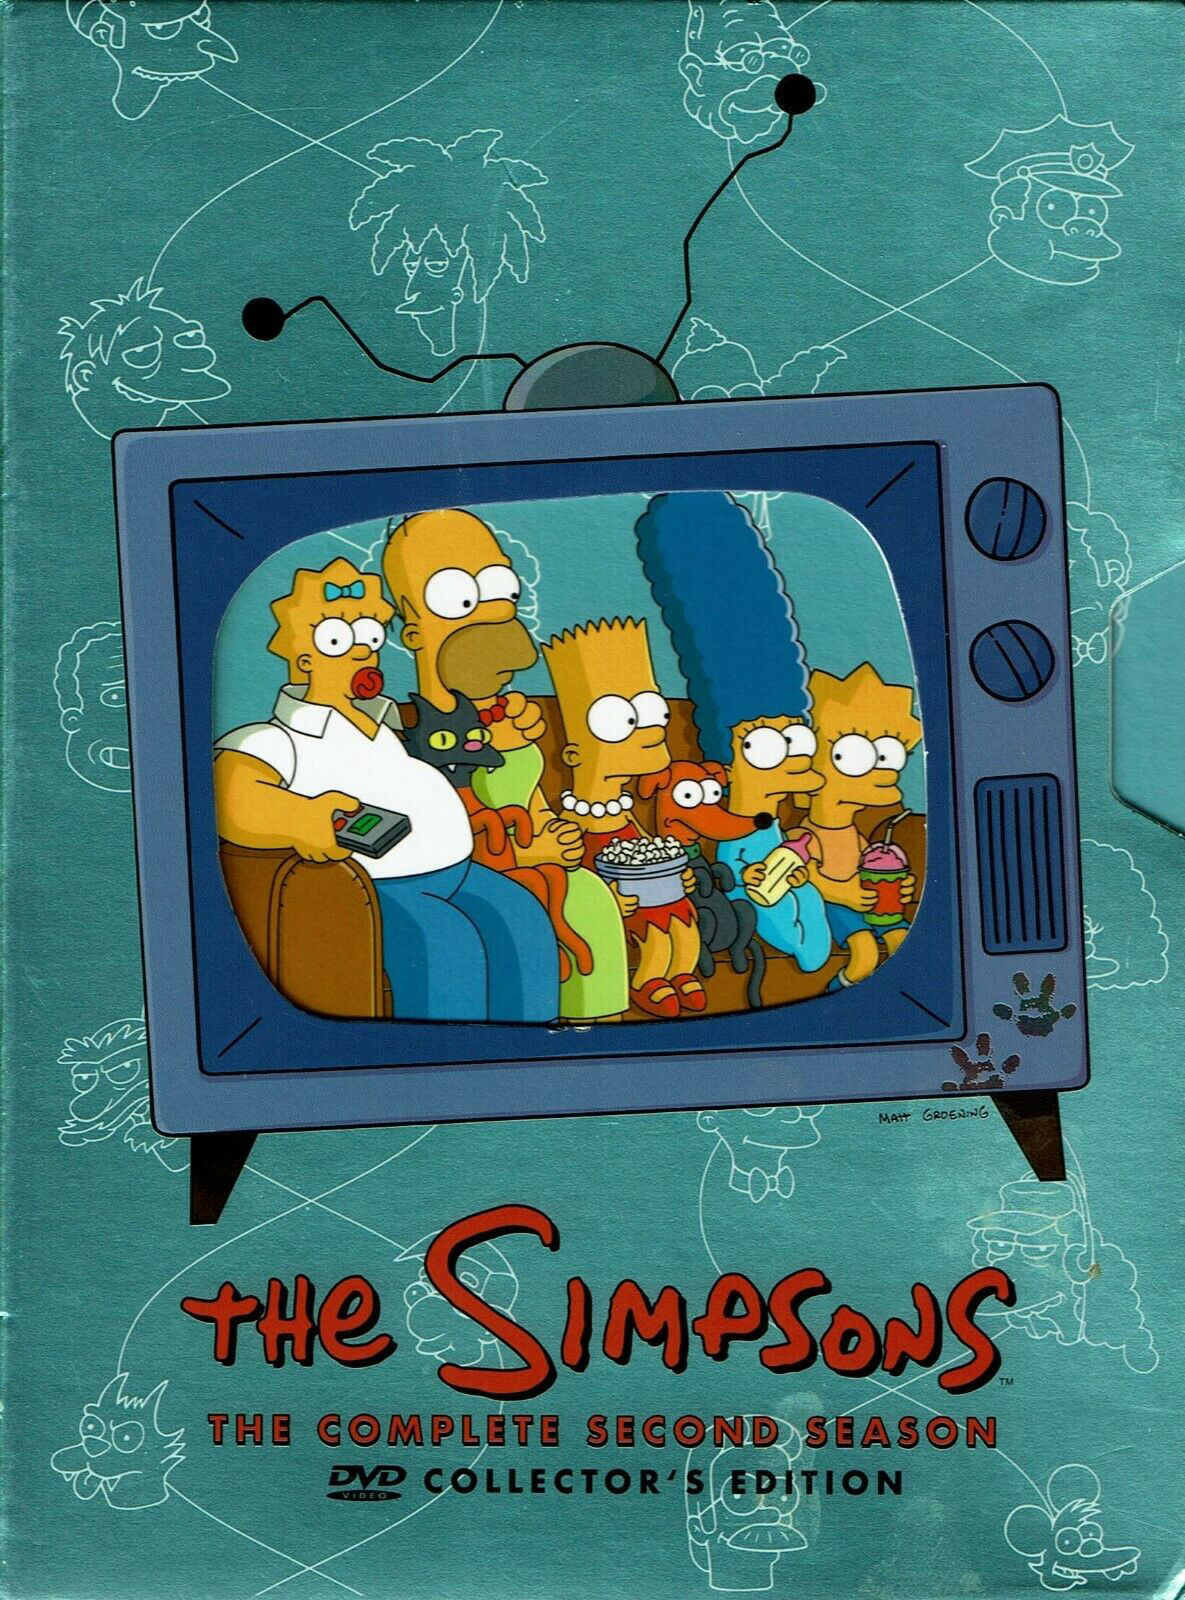 the simpsons season 30 episode 20 putlockers